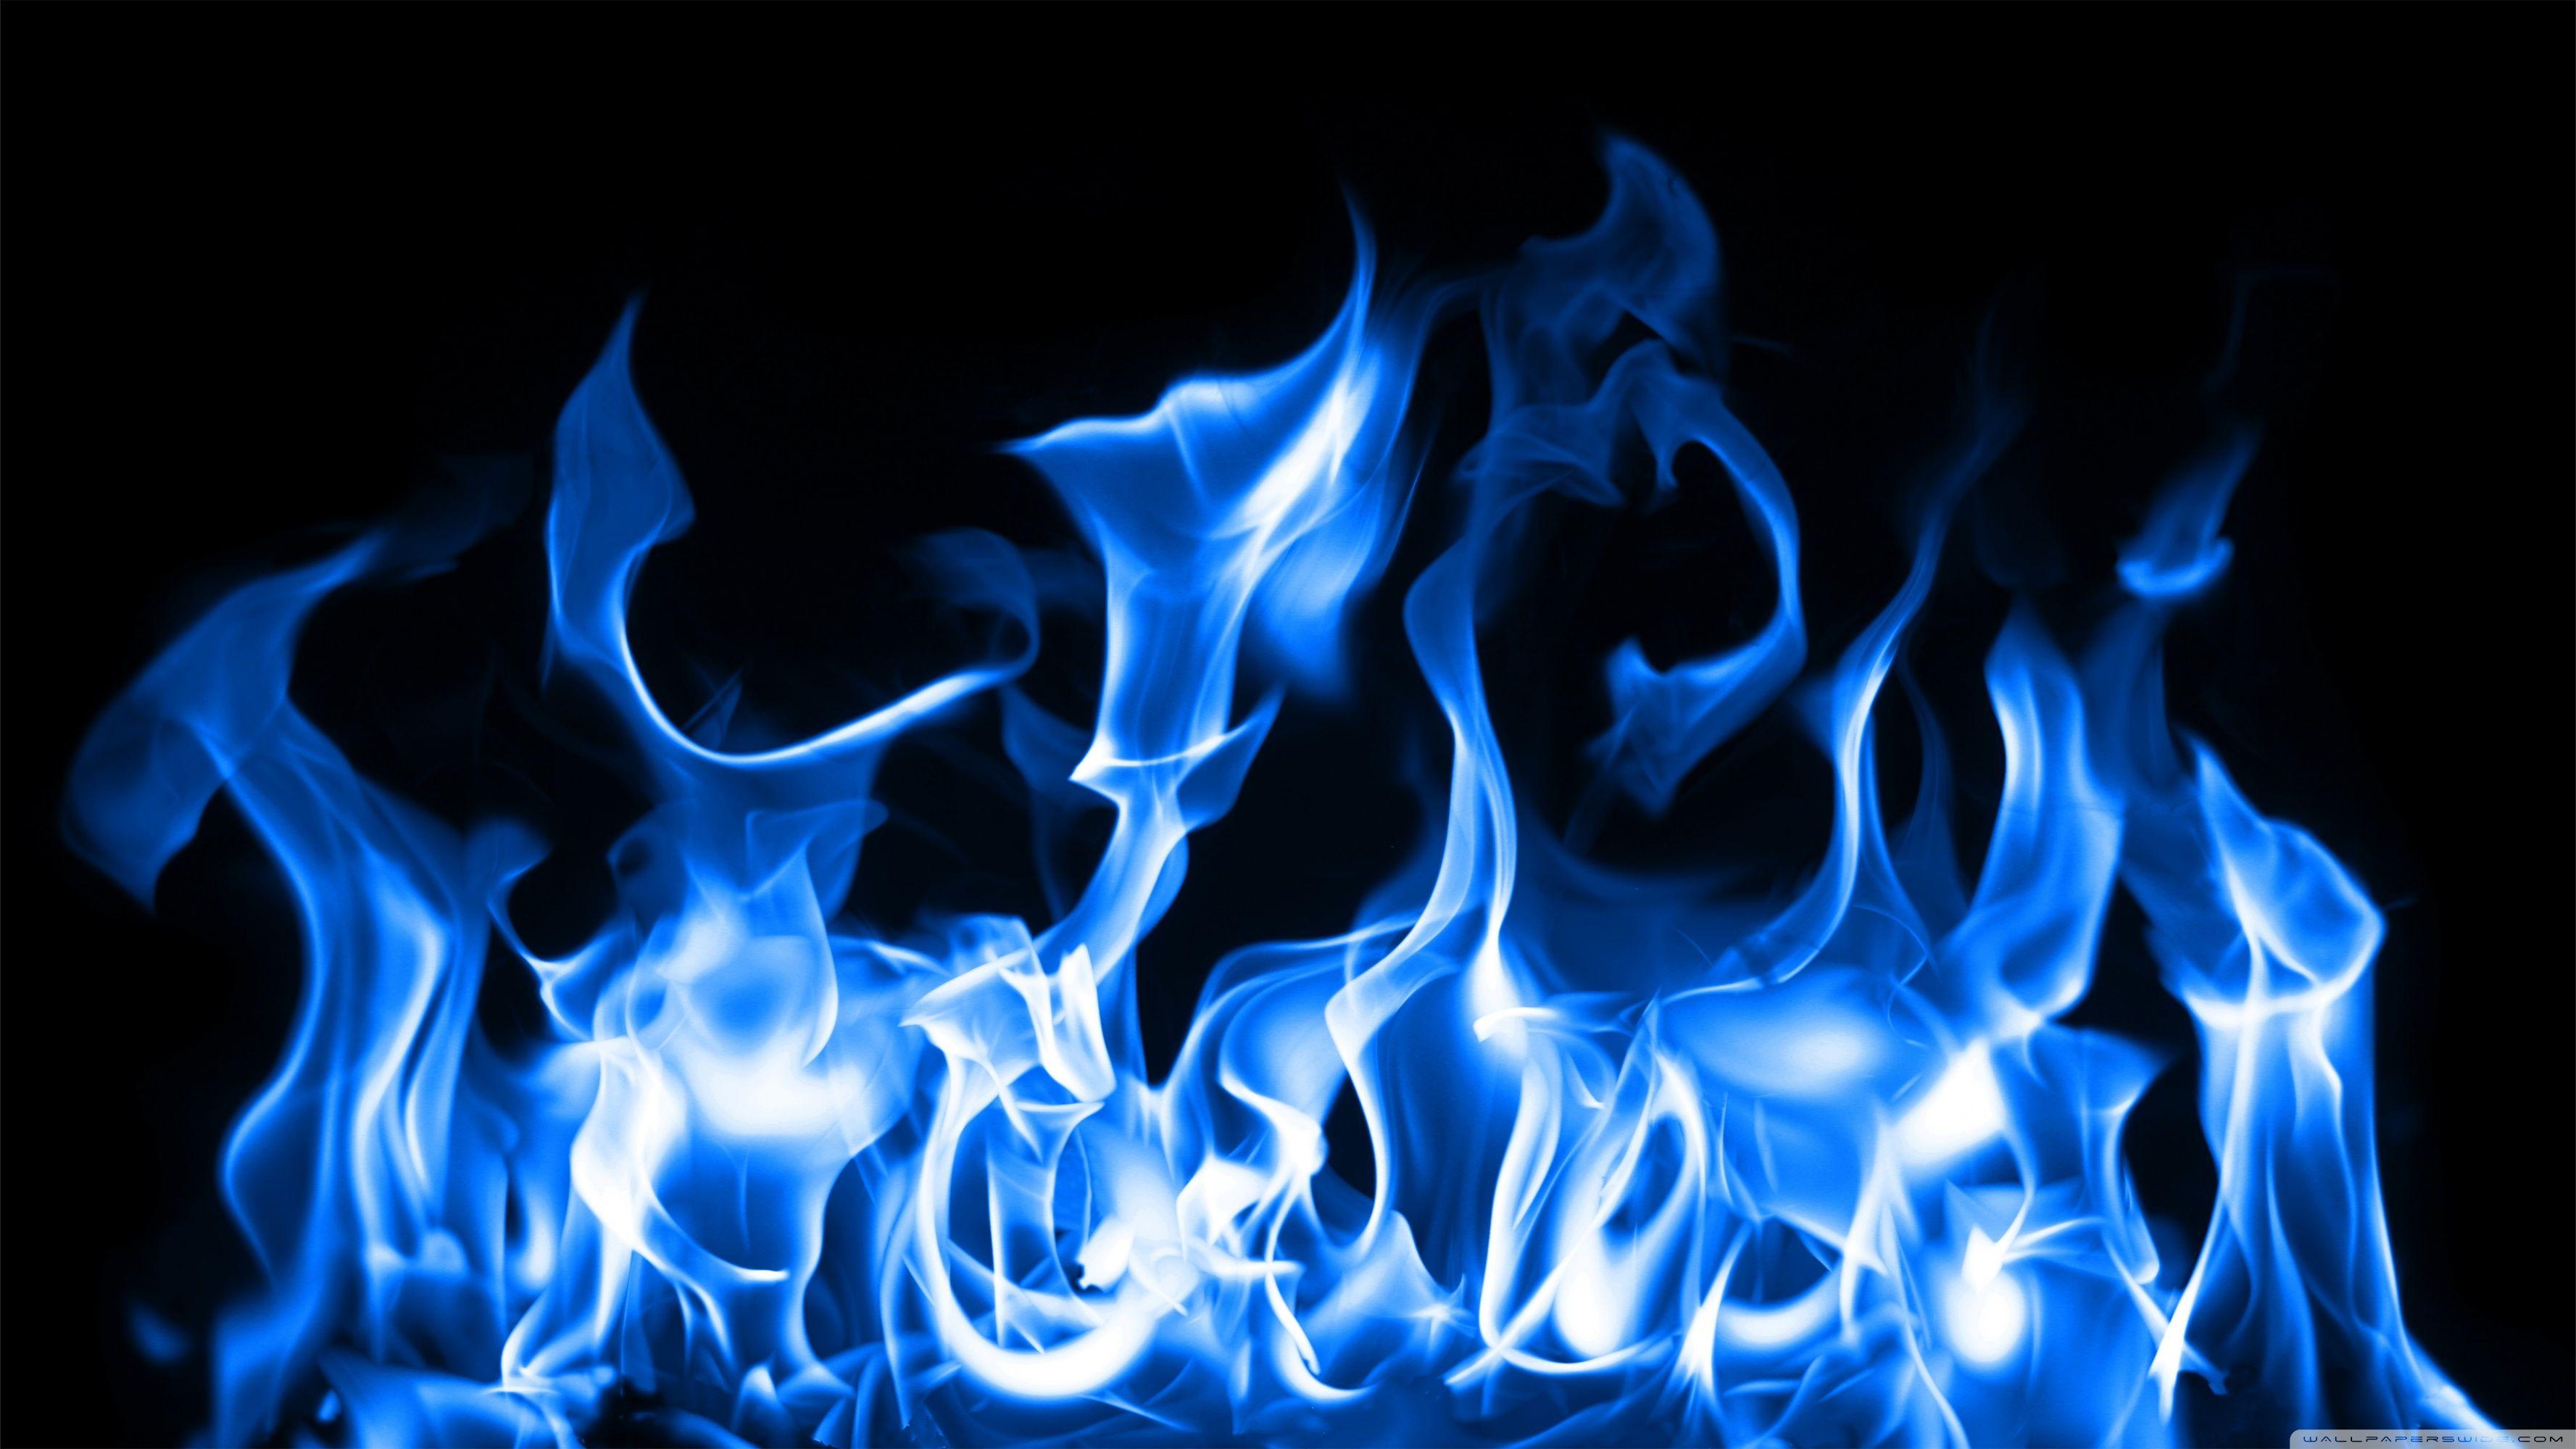 Download wallpapers blue fire 4k fire flames burn fire darkness   Flame art Free background photos Fire art